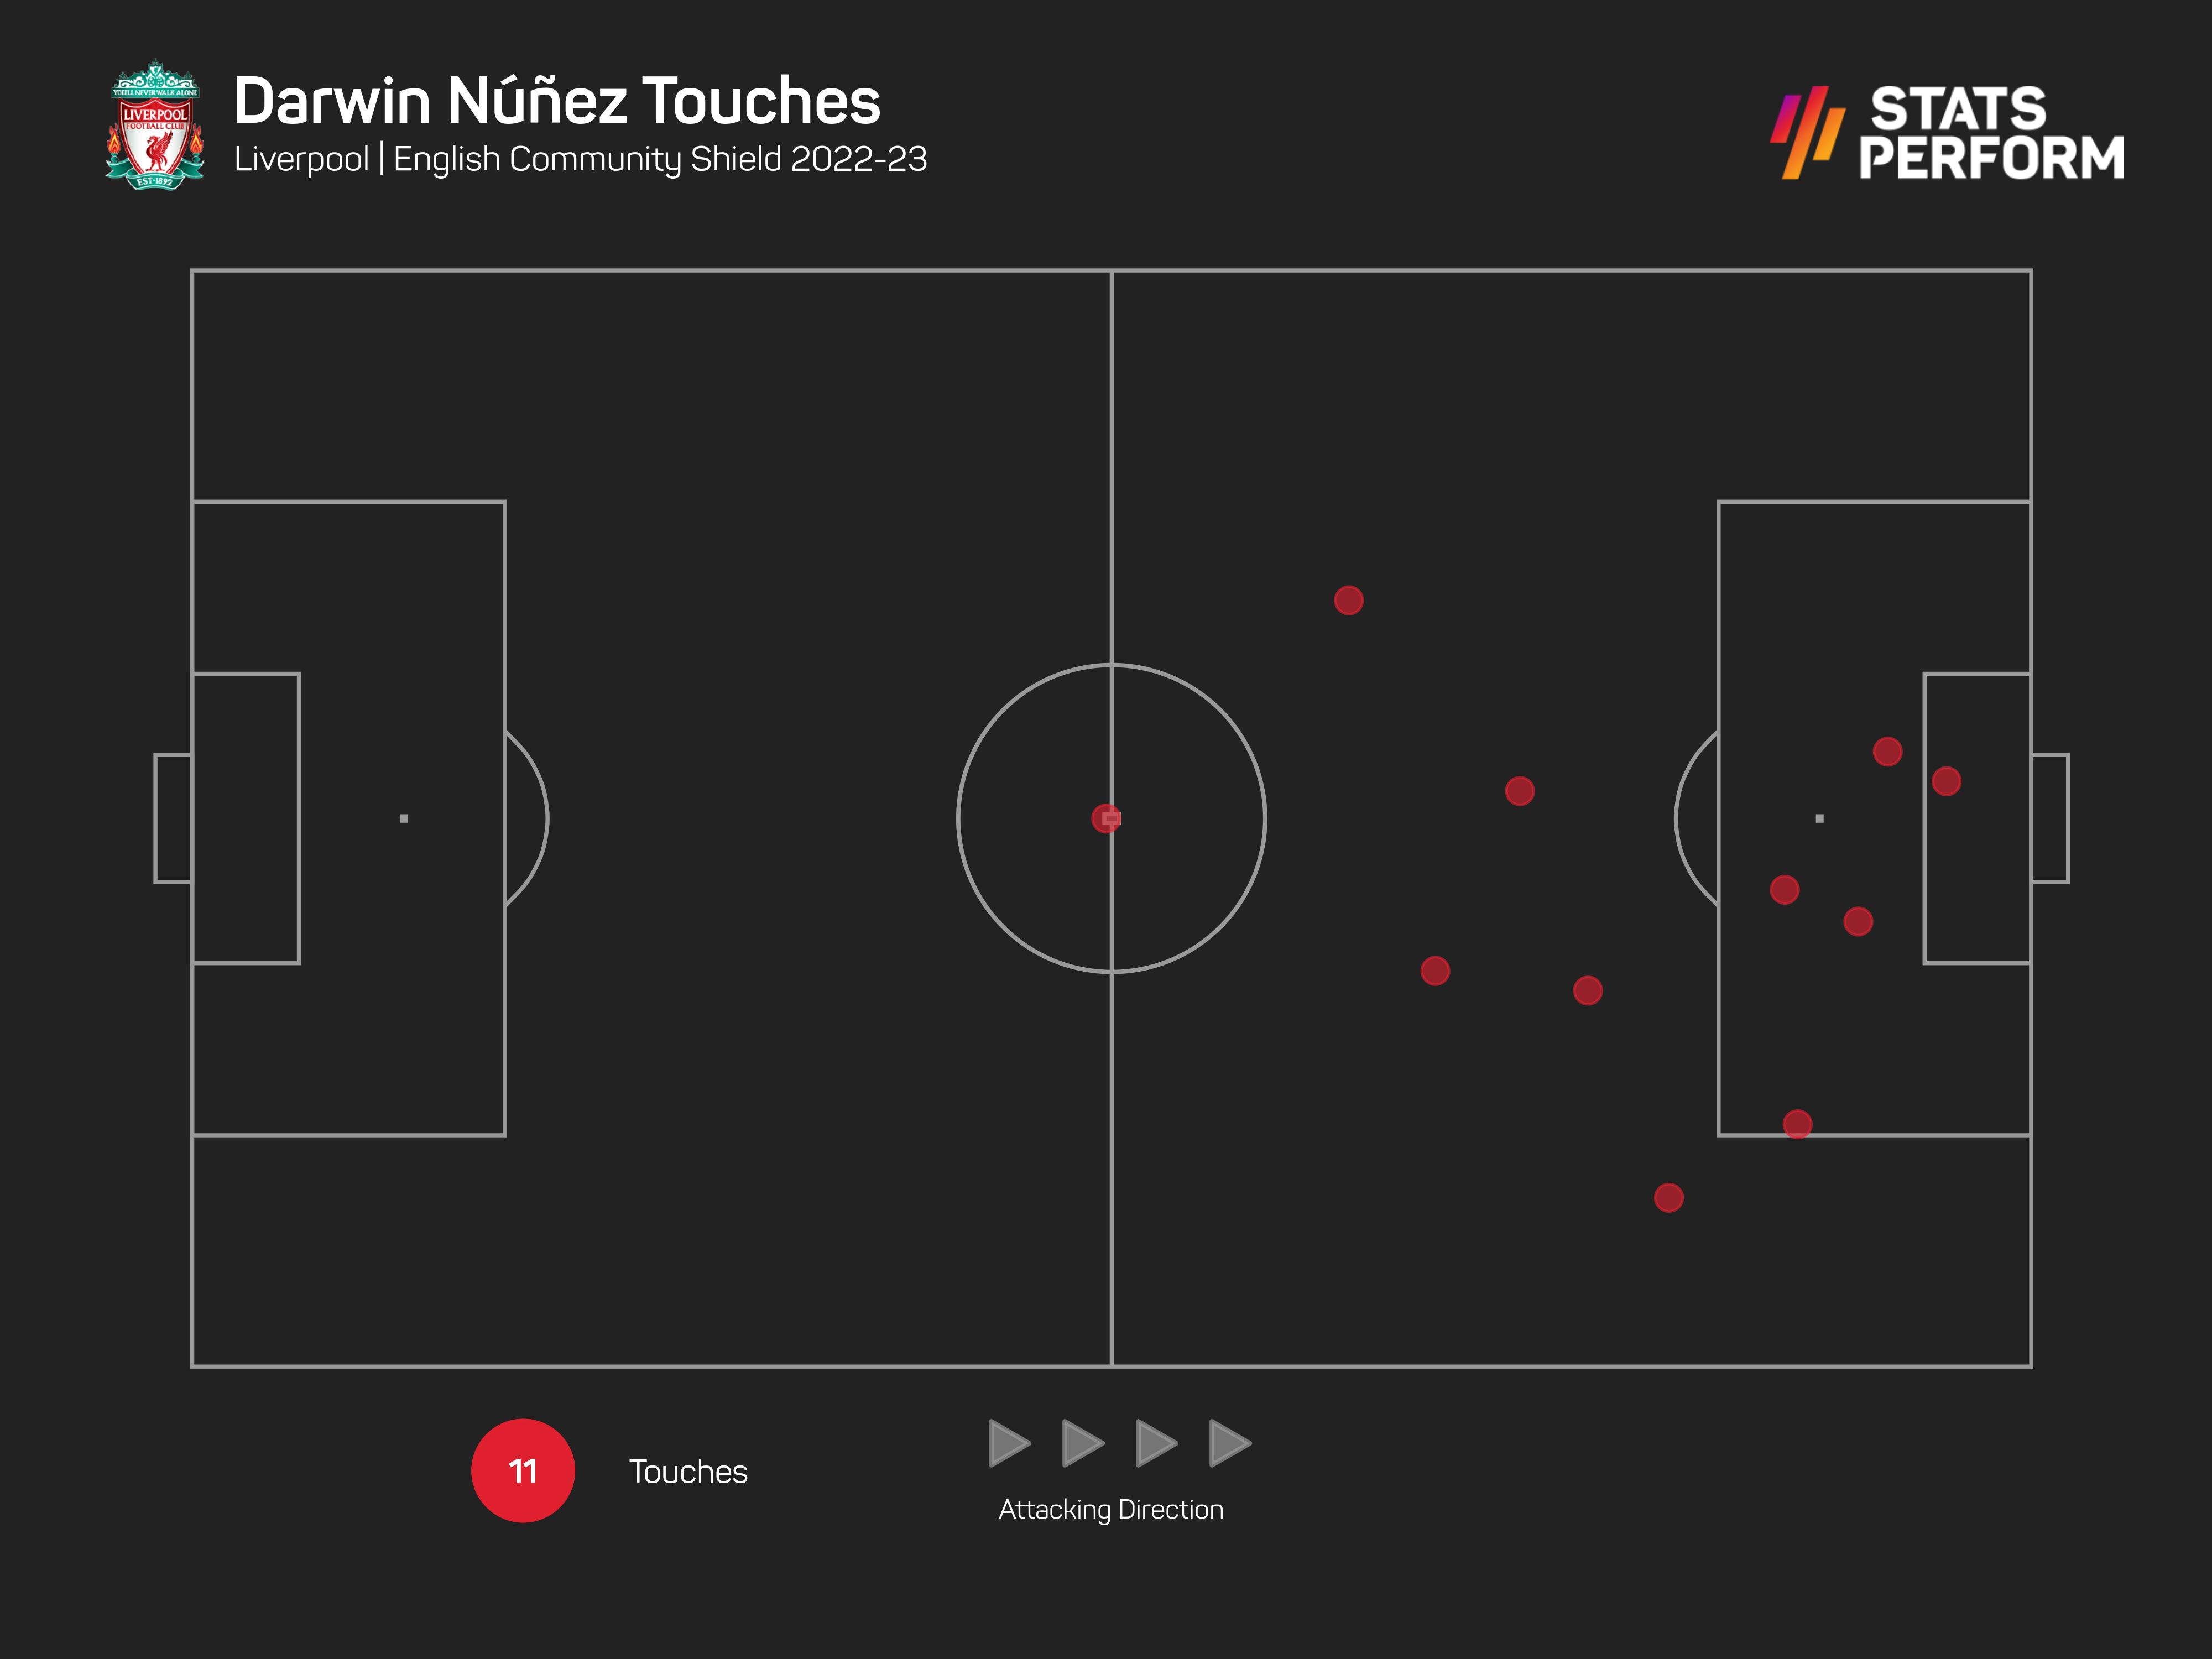 Darwin Nunez made a big impact for Liverpool